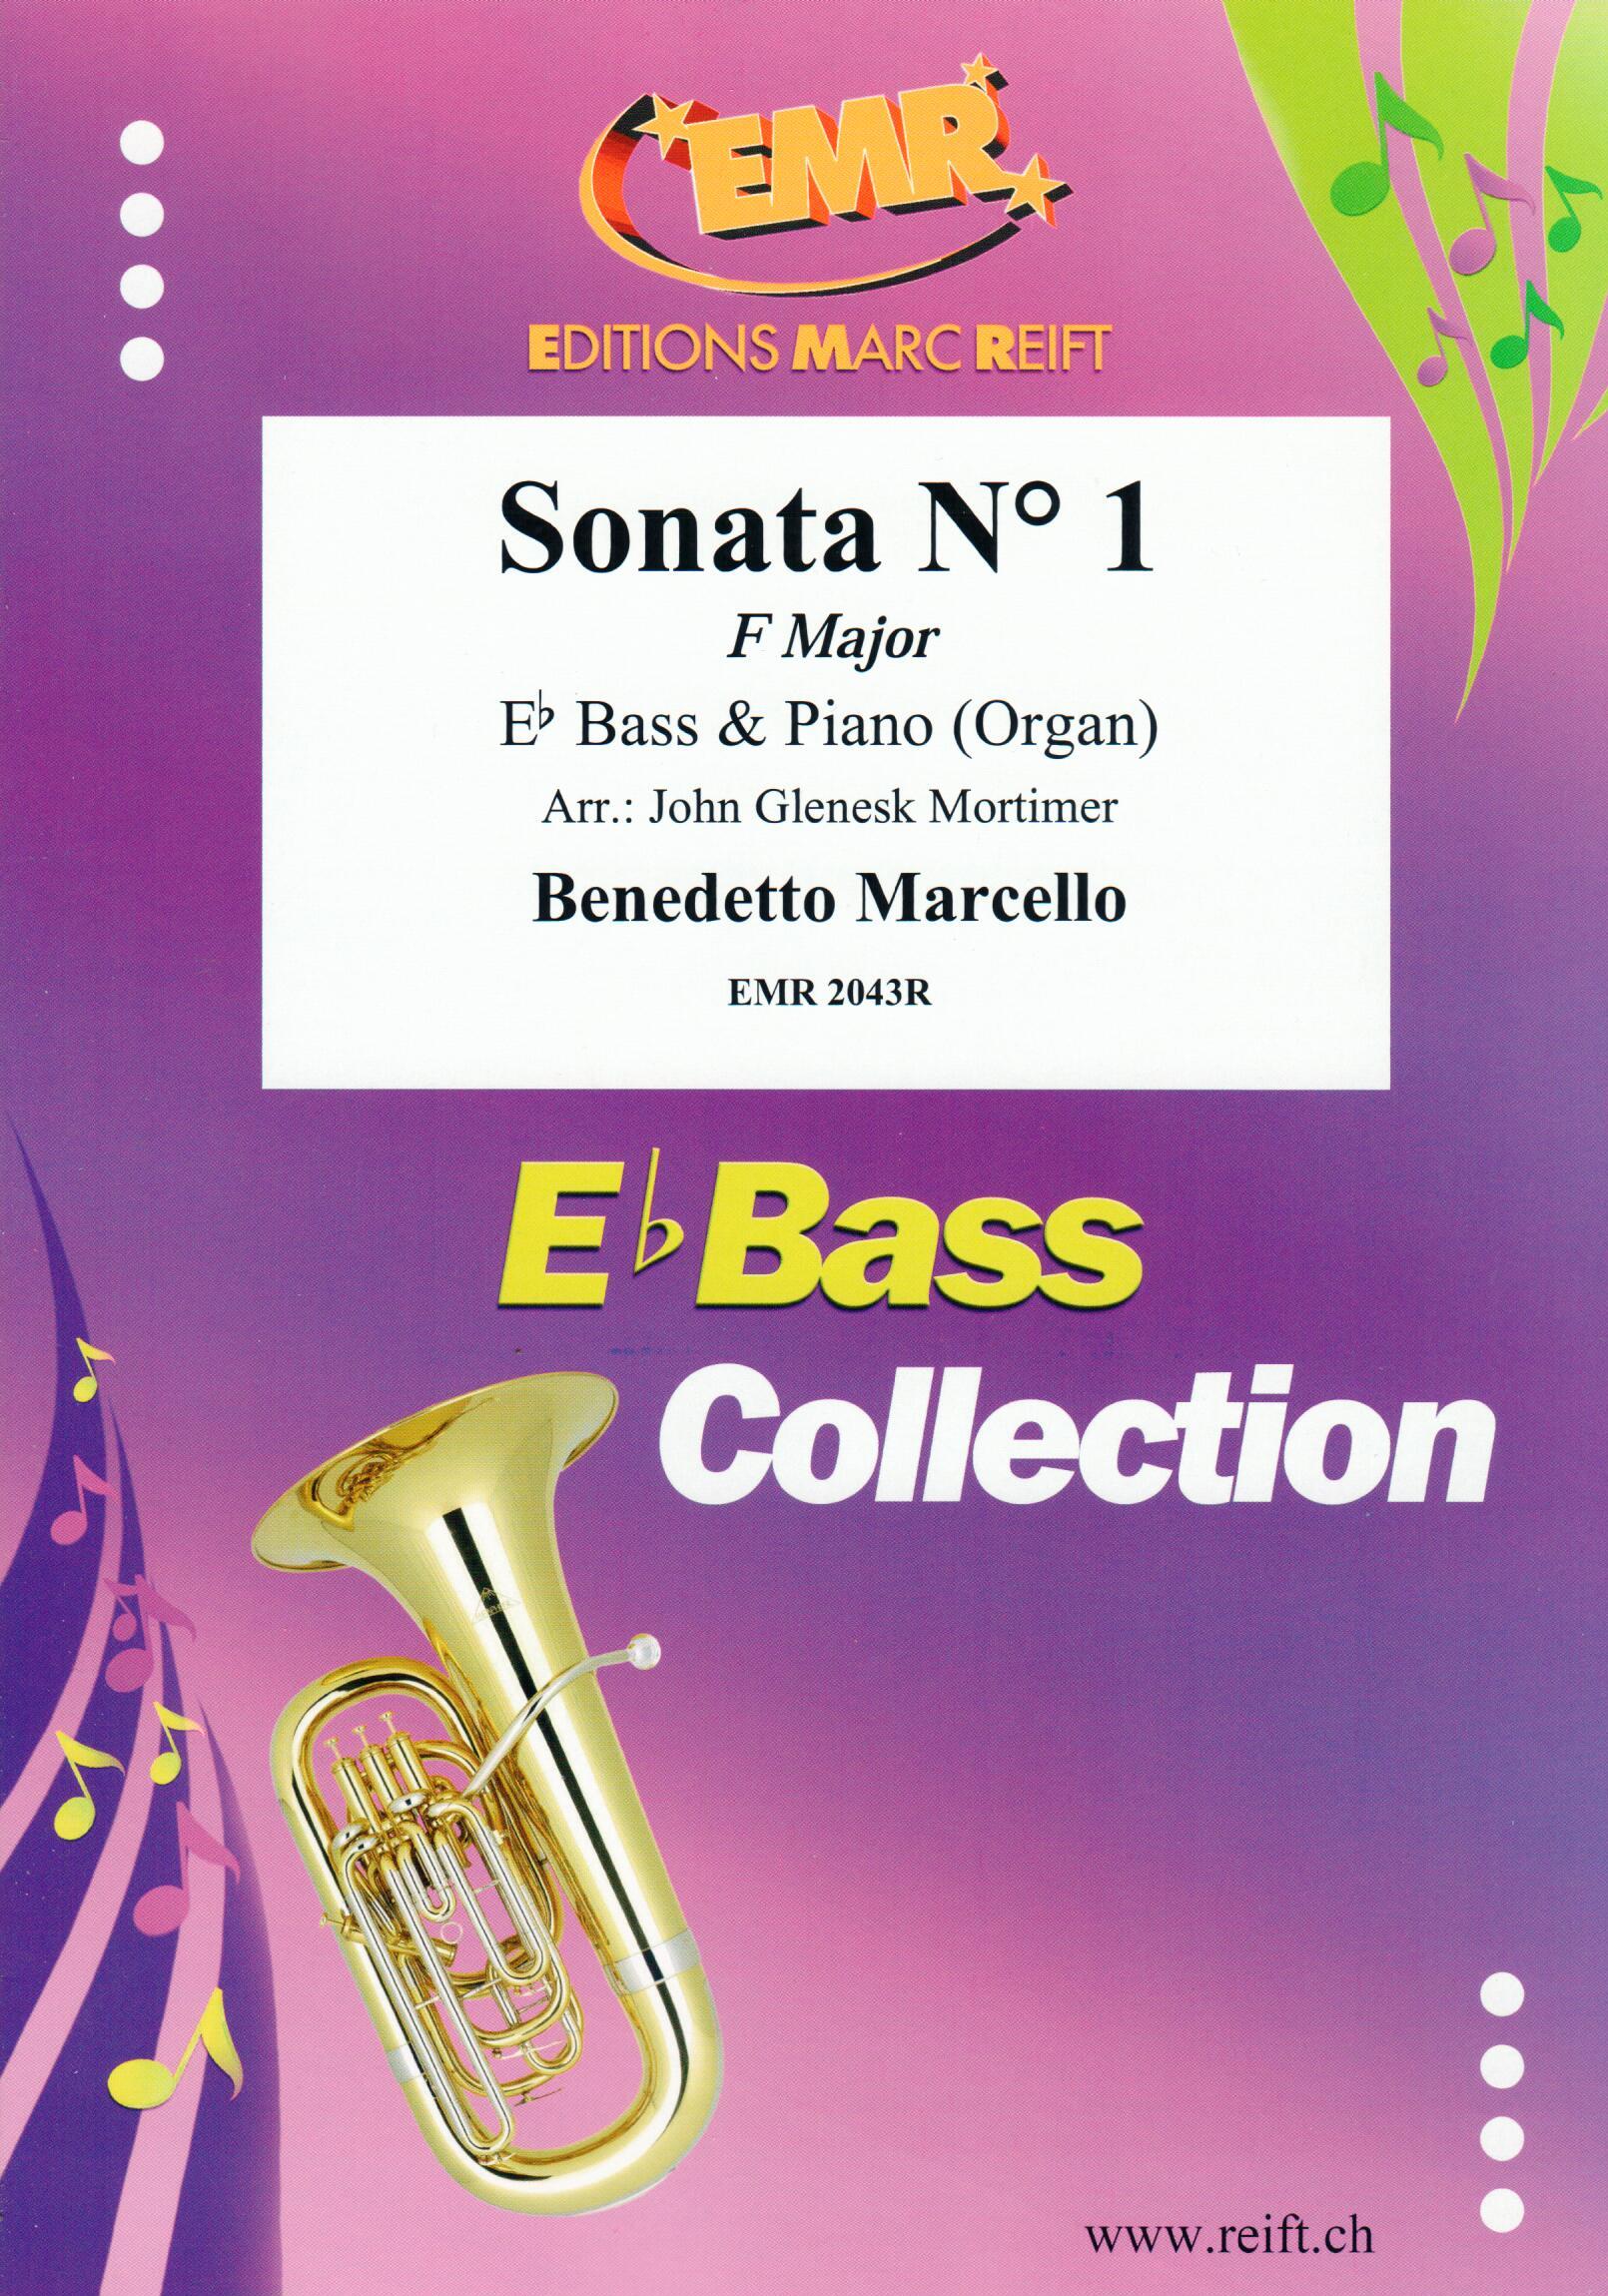 SONATA N° 1 IN F MAJOR, SOLOS - E♭. Bass